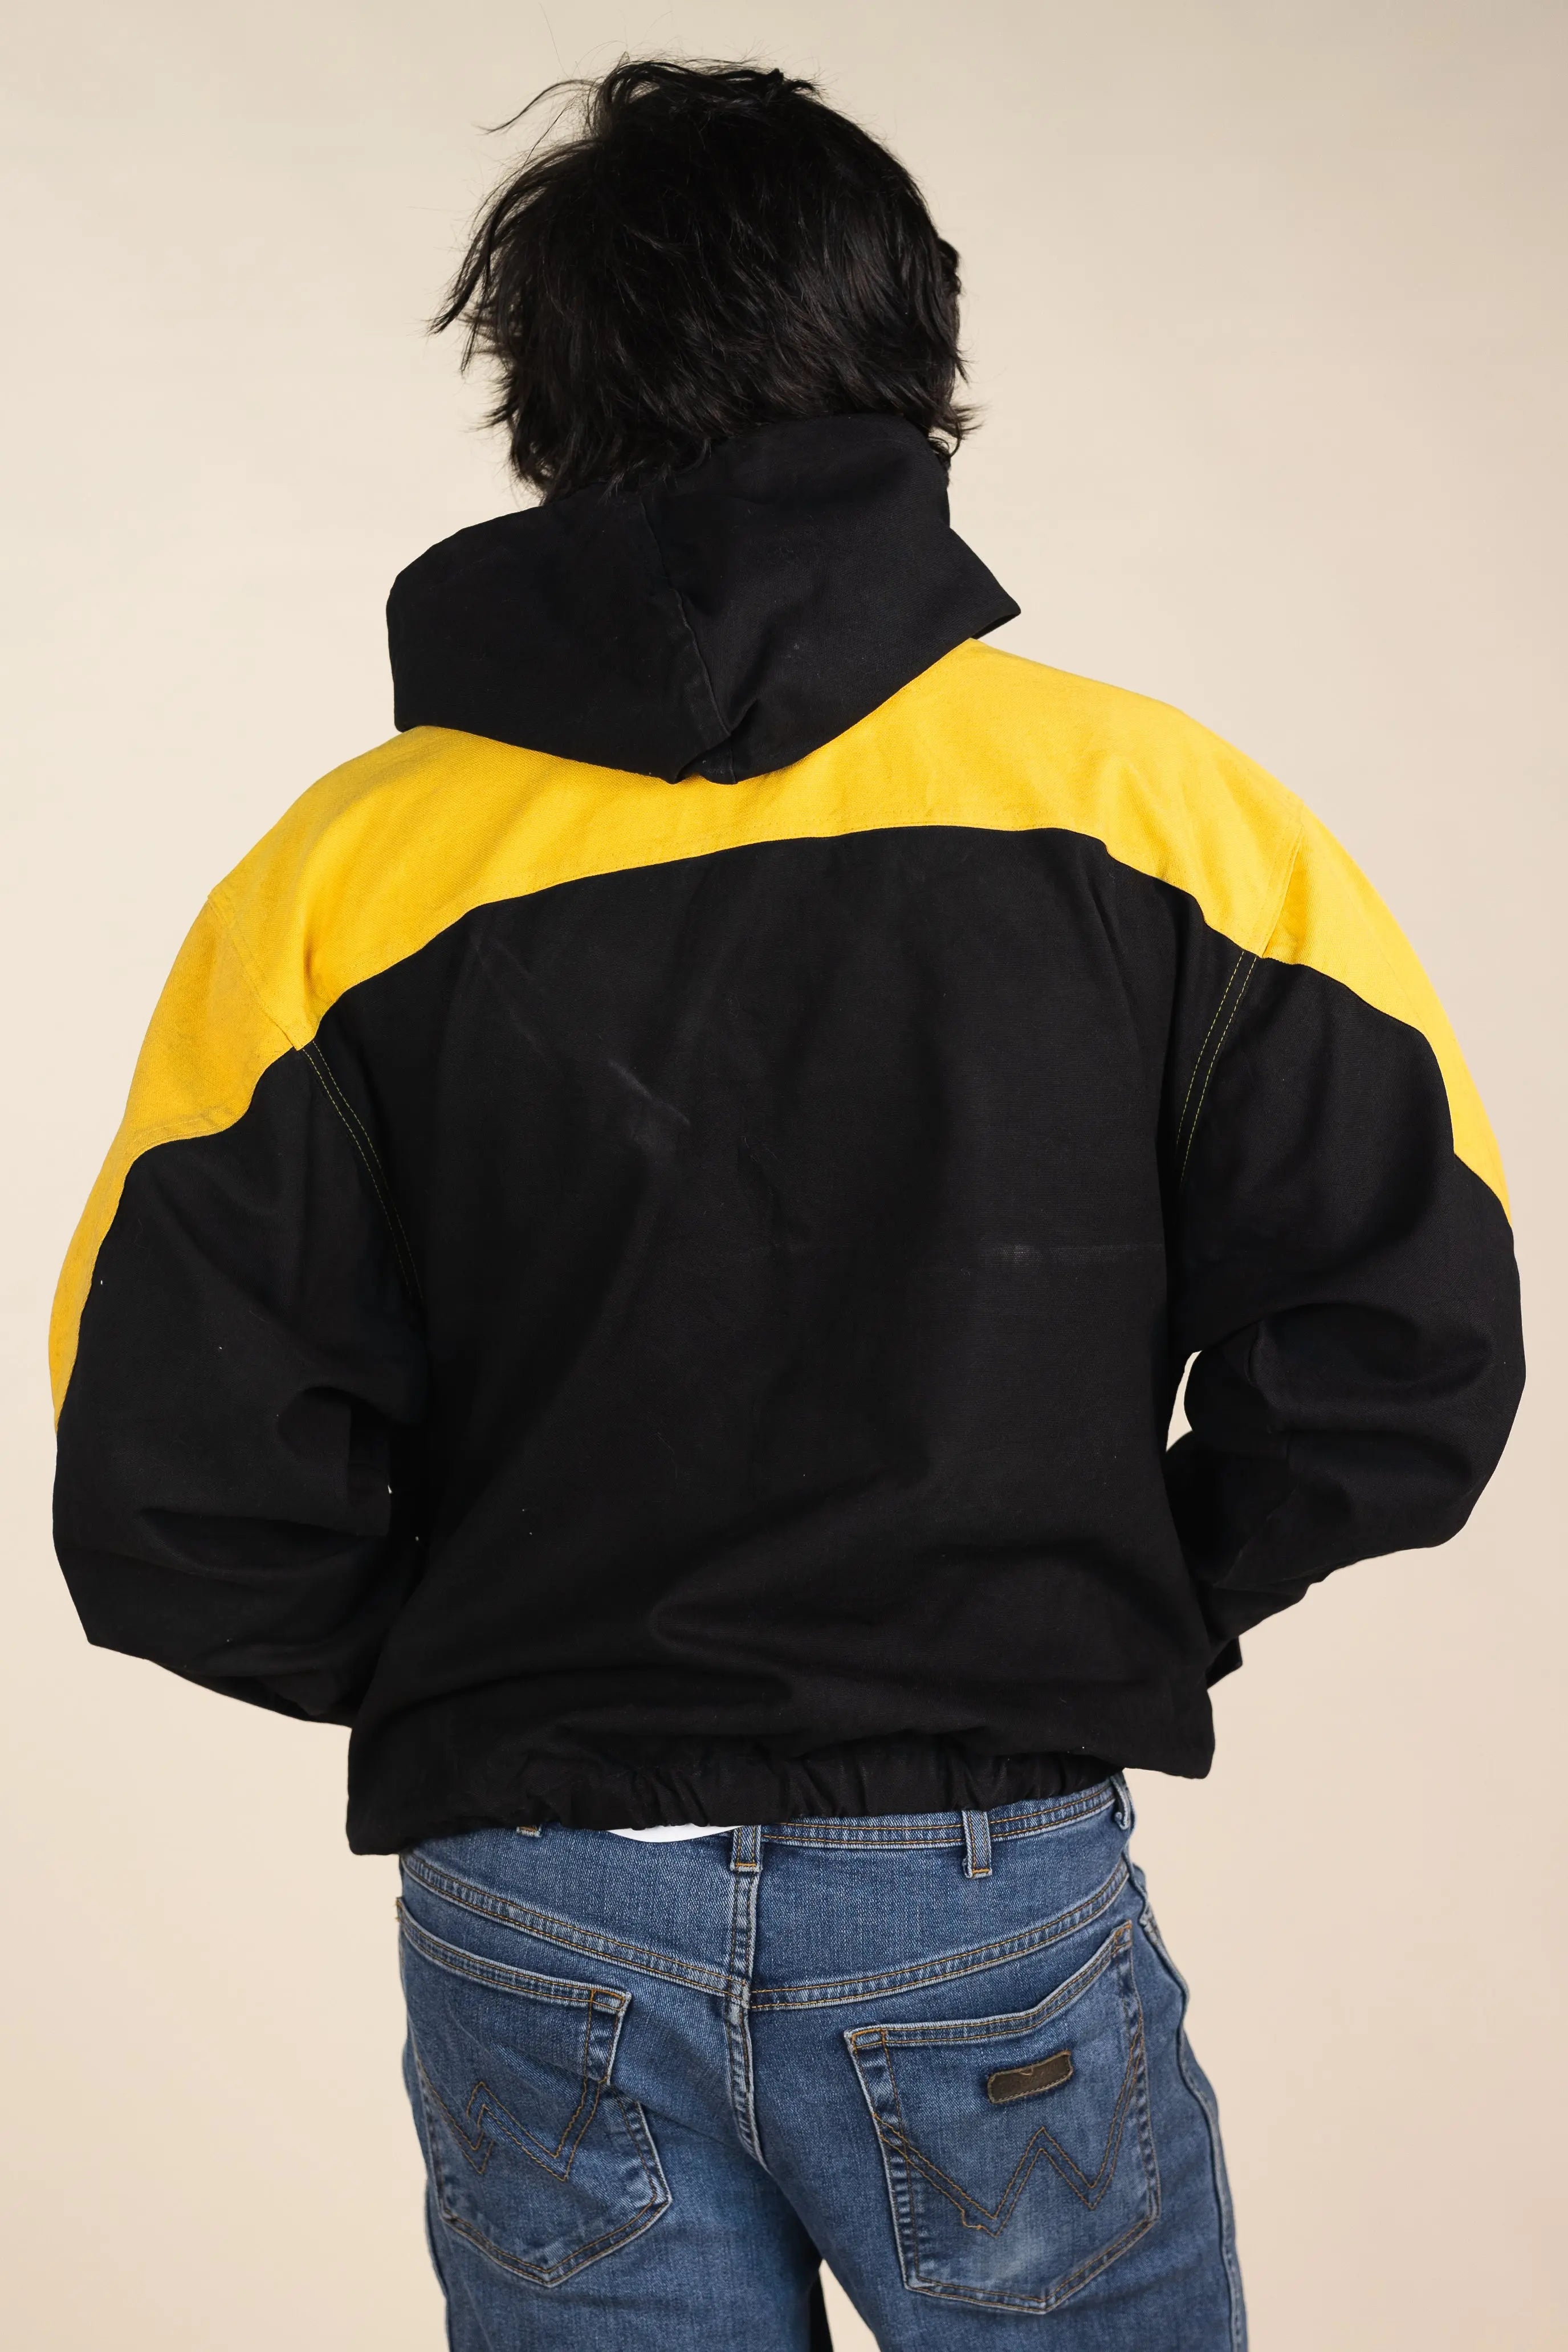 Mr. King - Sport Jacket- ThriftTale.com - Vintage and second handclothing